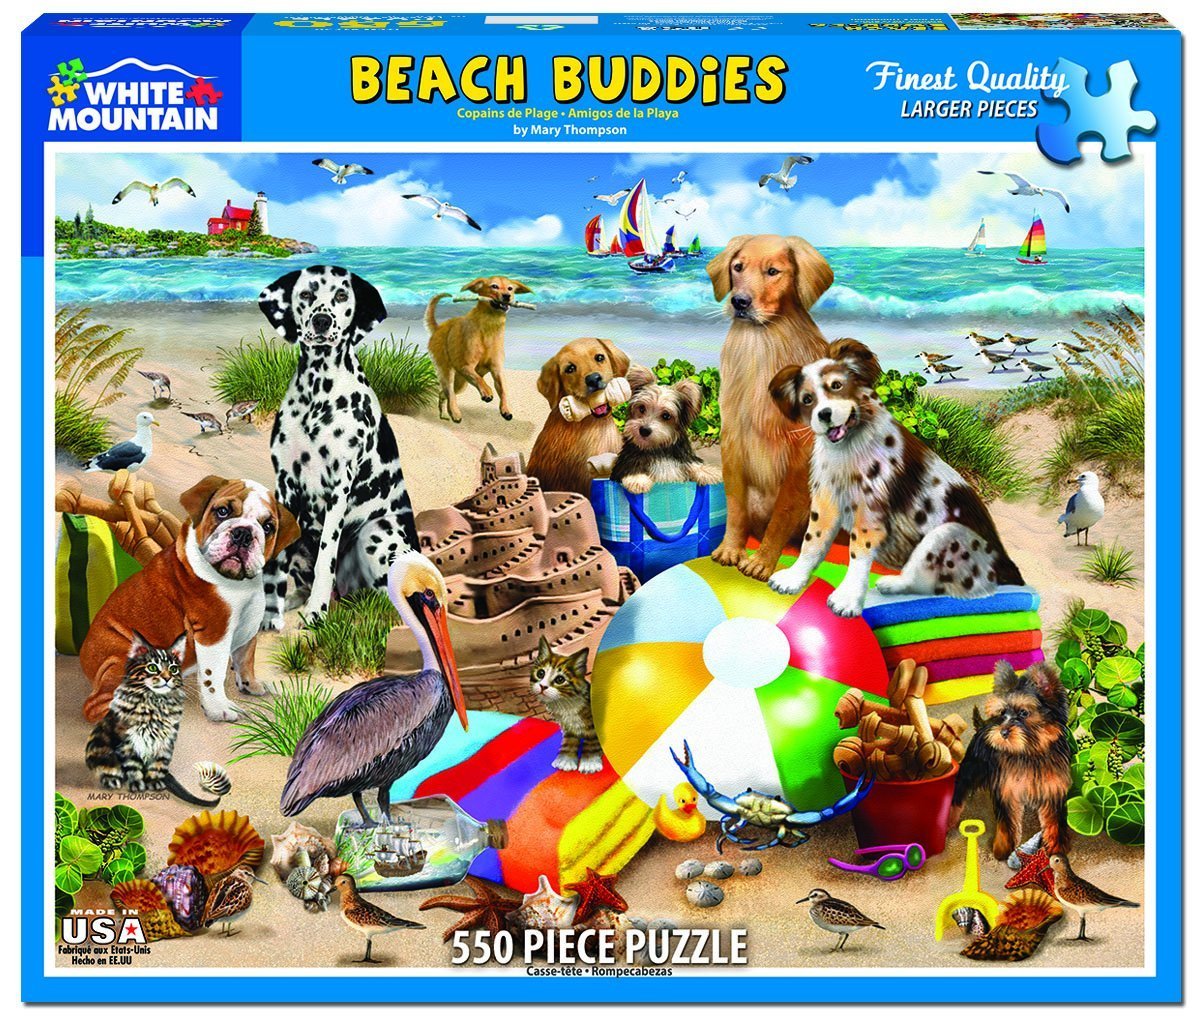 White Mountain Puzzles Beach Buddies, 500 Piece Jigsaw Puzzle